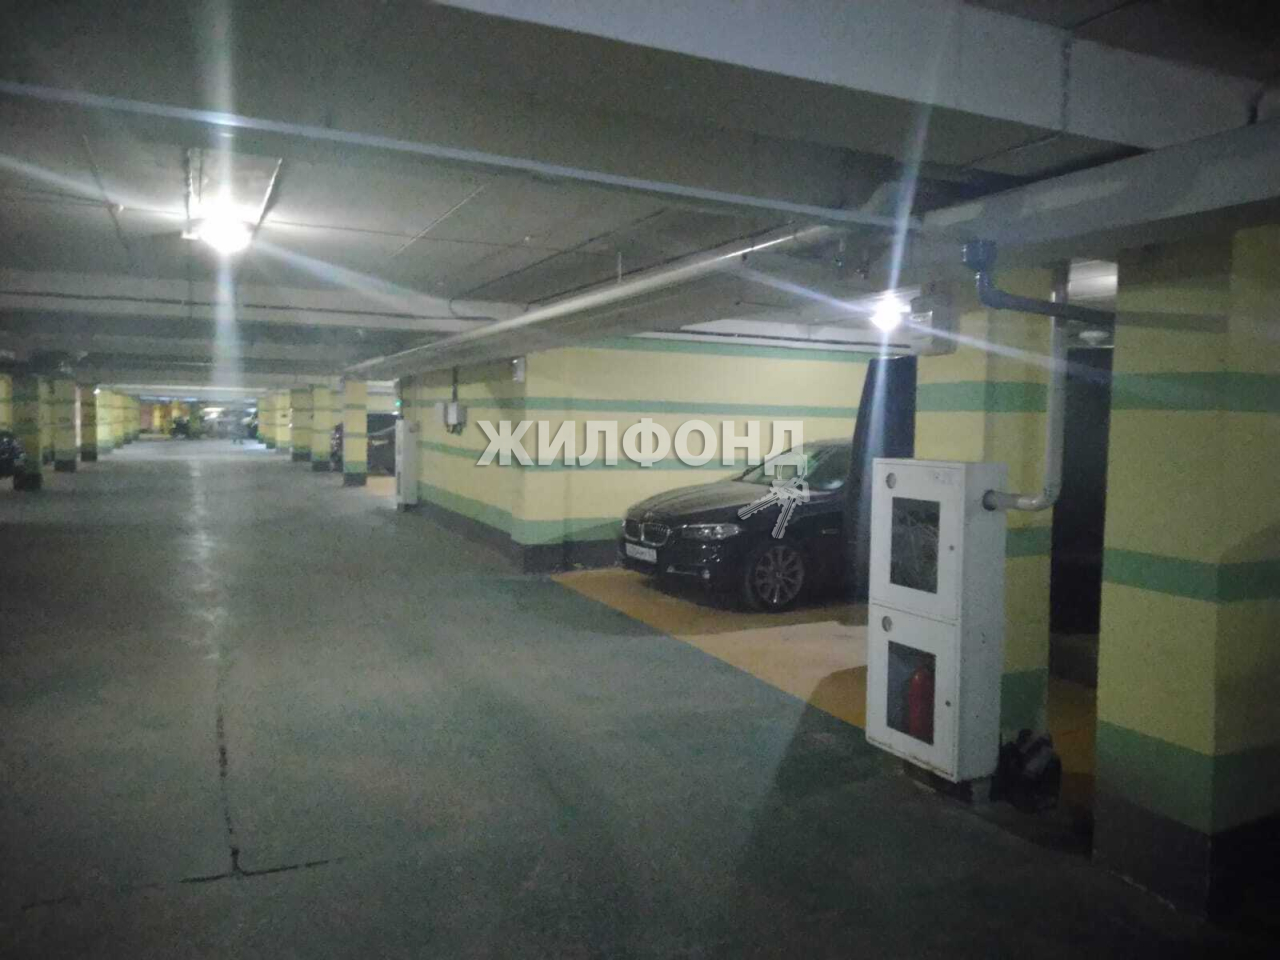 Парковка орджоникидзе. Орджоникидзе 47 Новосибирск купить парковку. Фото парковки Орджоникидзе 47 Новосибирск.